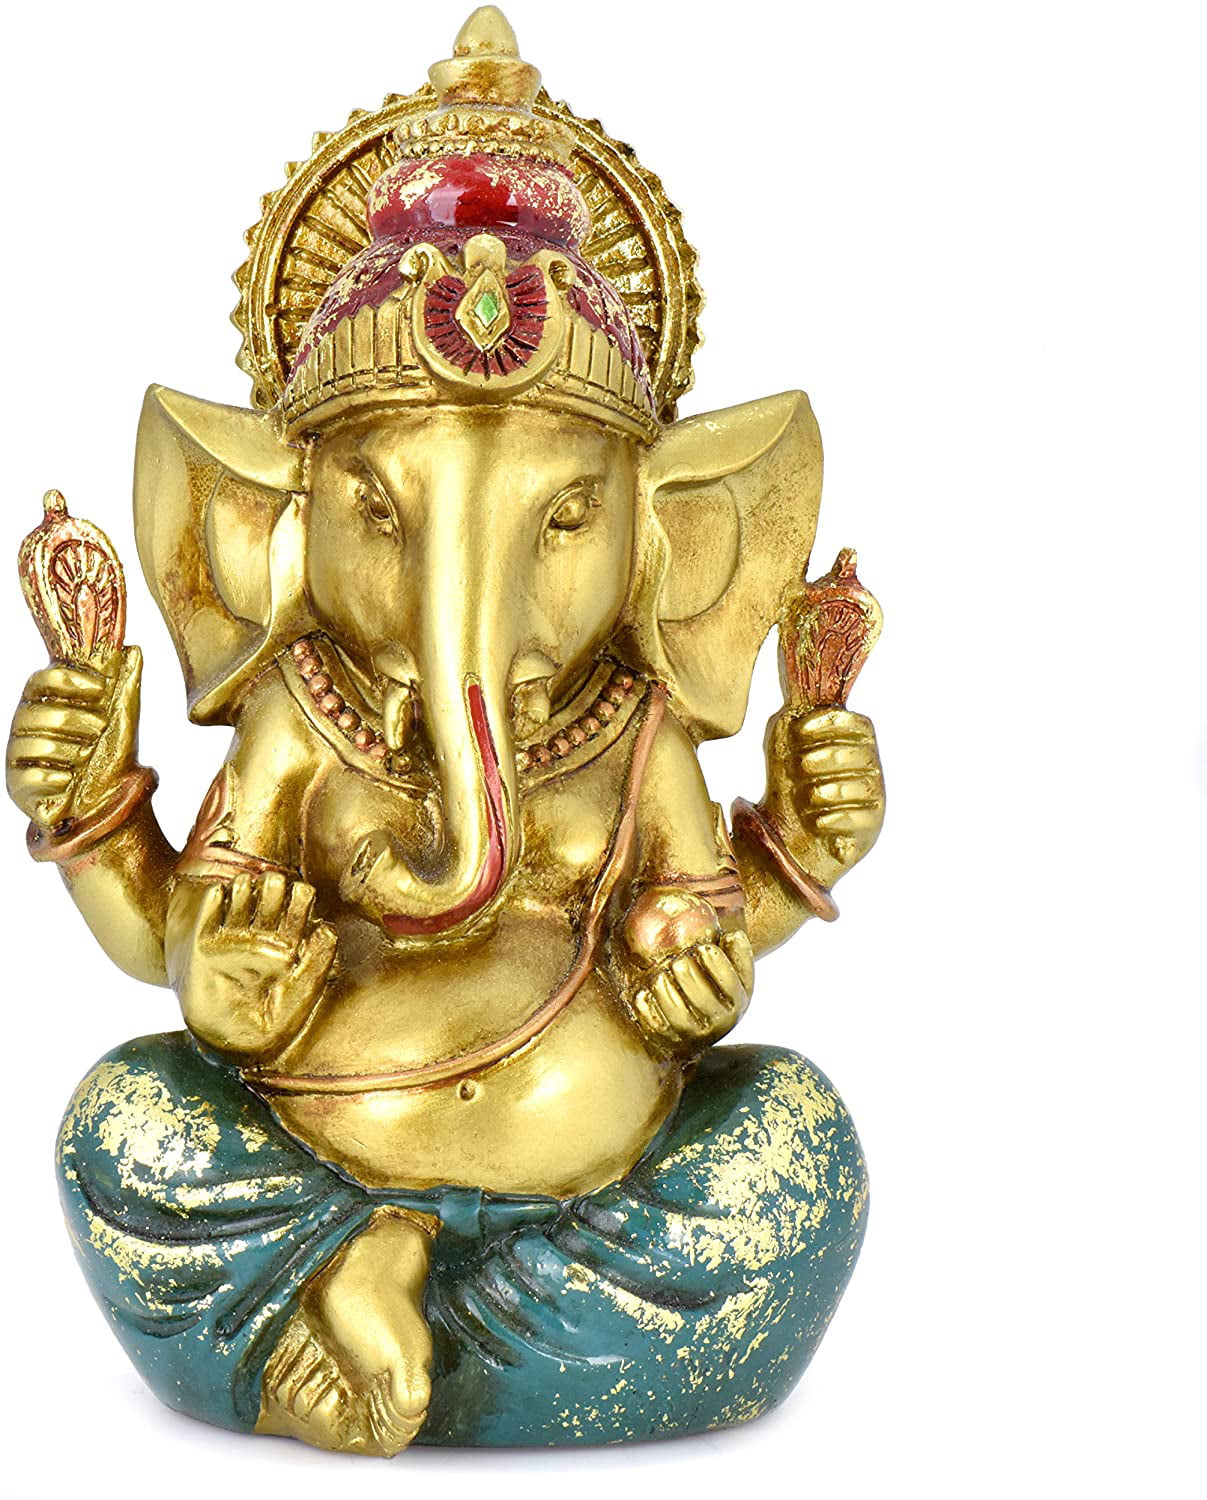 Ganesh Statue Hindu Ganesha God Elephant Lord Figurine Resin White Color 